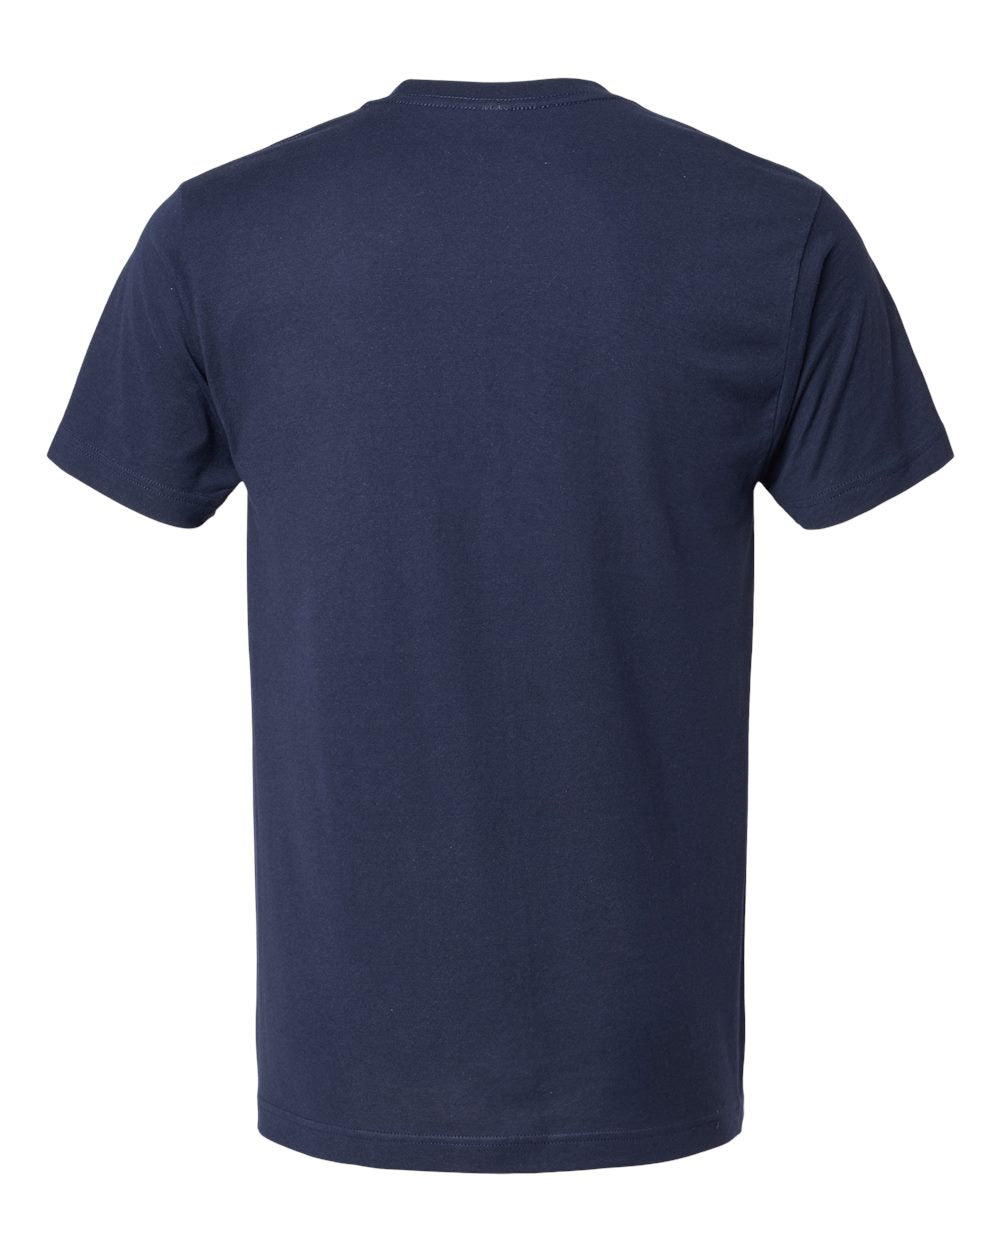 Unisex Cotton T-Shirt - Navy